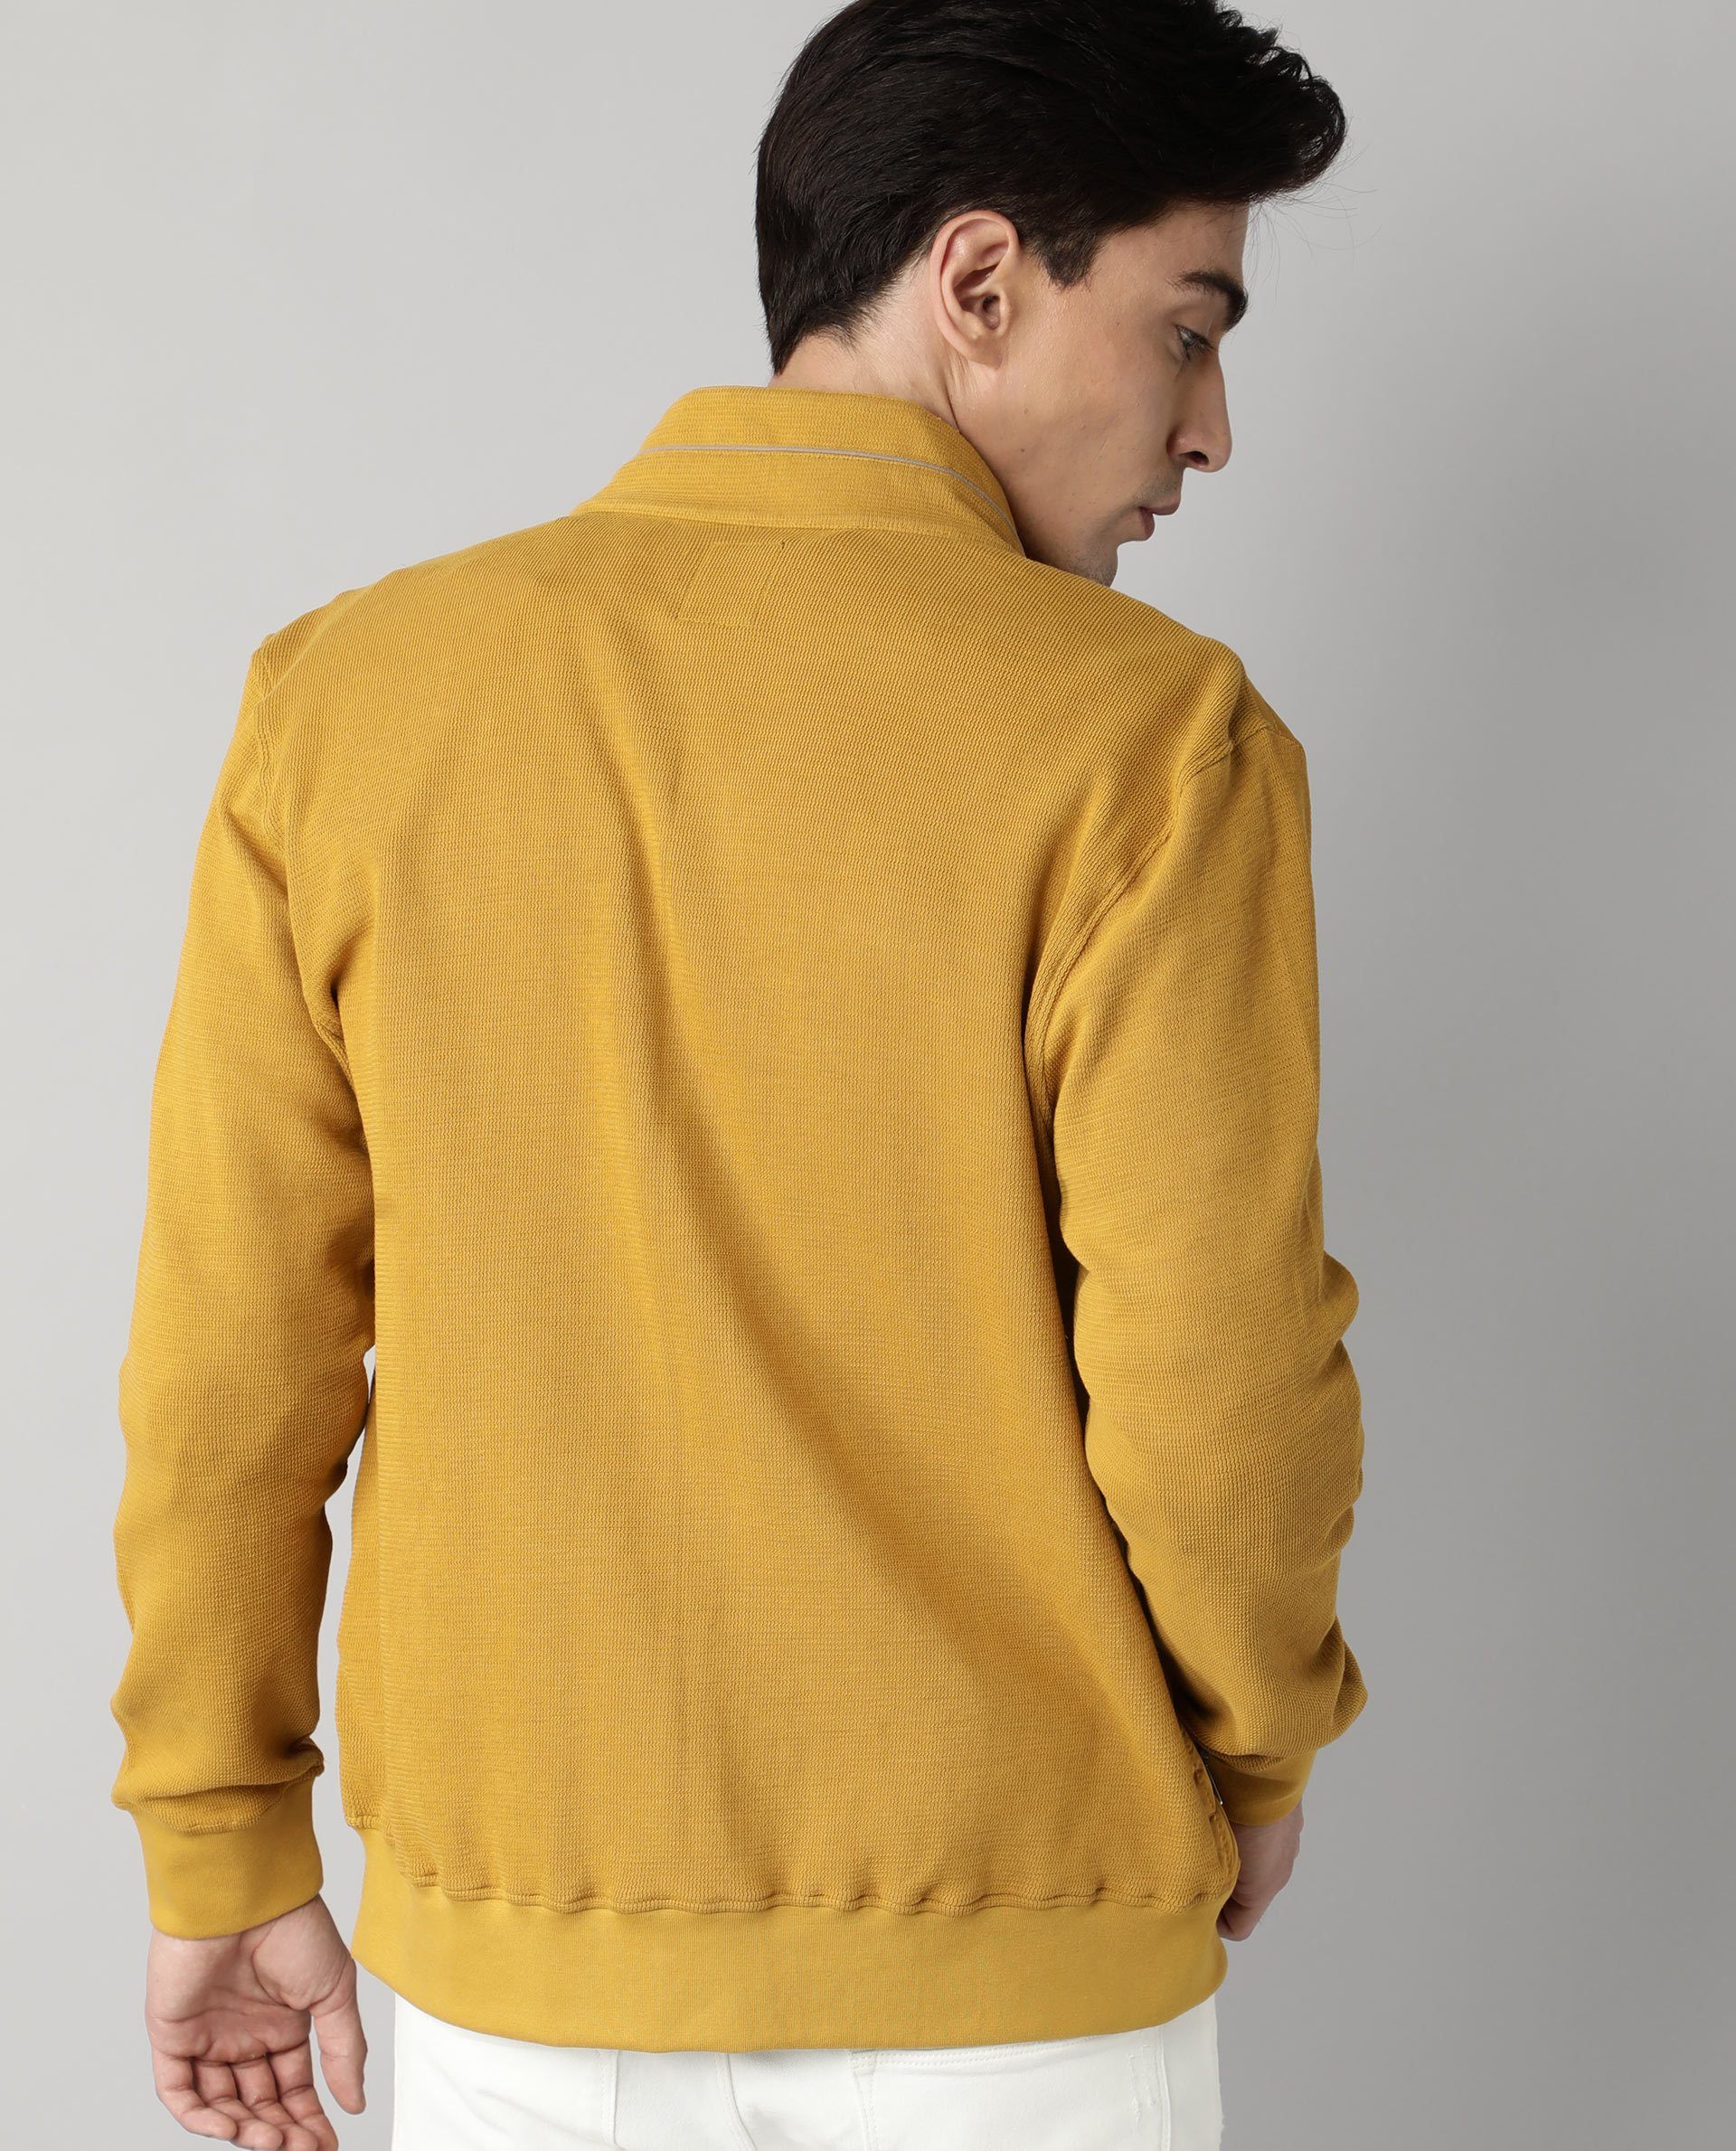 Sunburst Yellow Men's Real Leather Jacket - Stylish and Durable